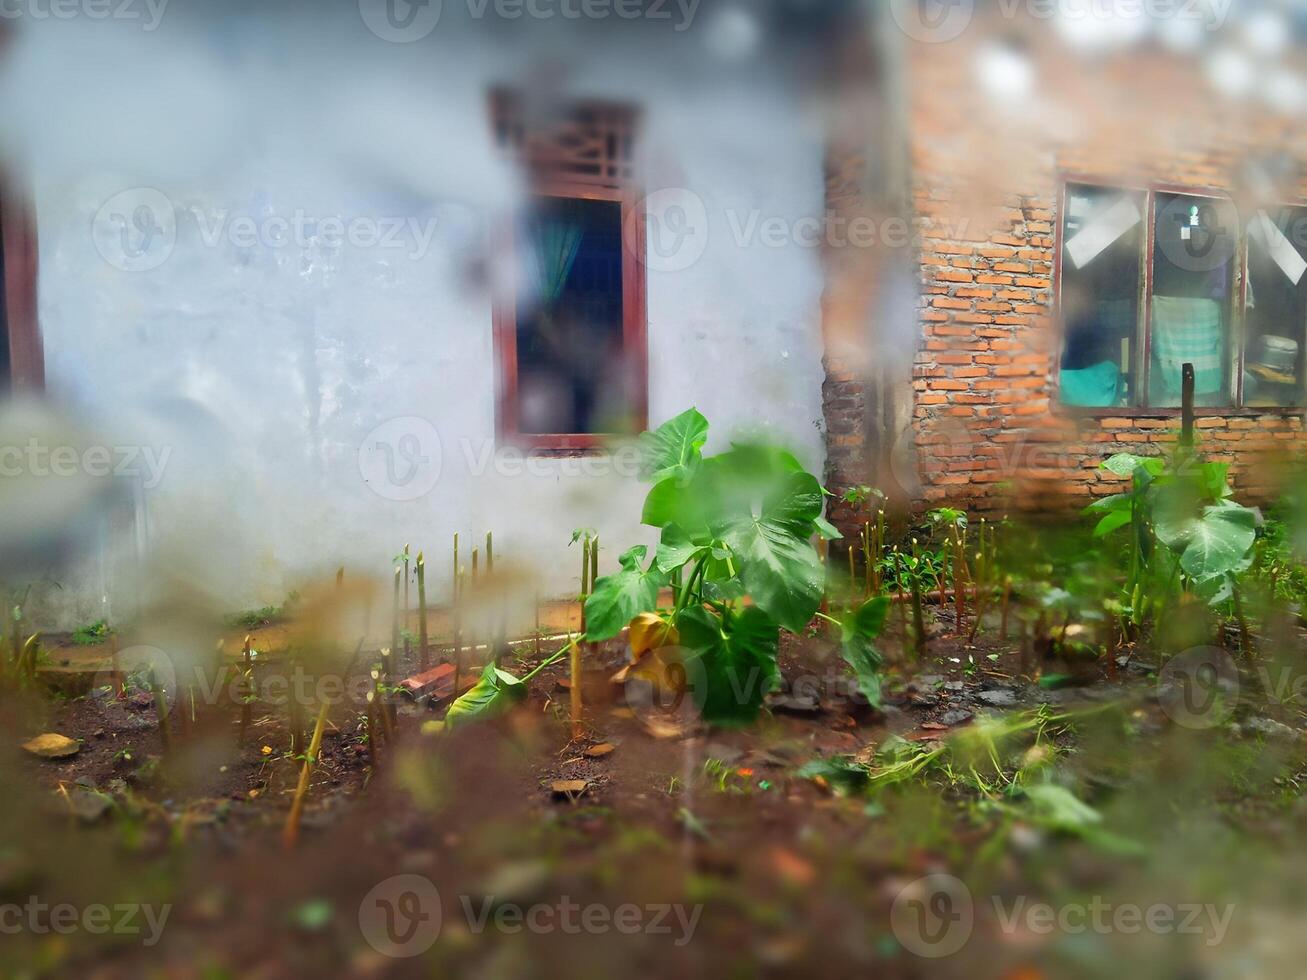 Capturing Wet House Garden with a Moist Lens Again photo